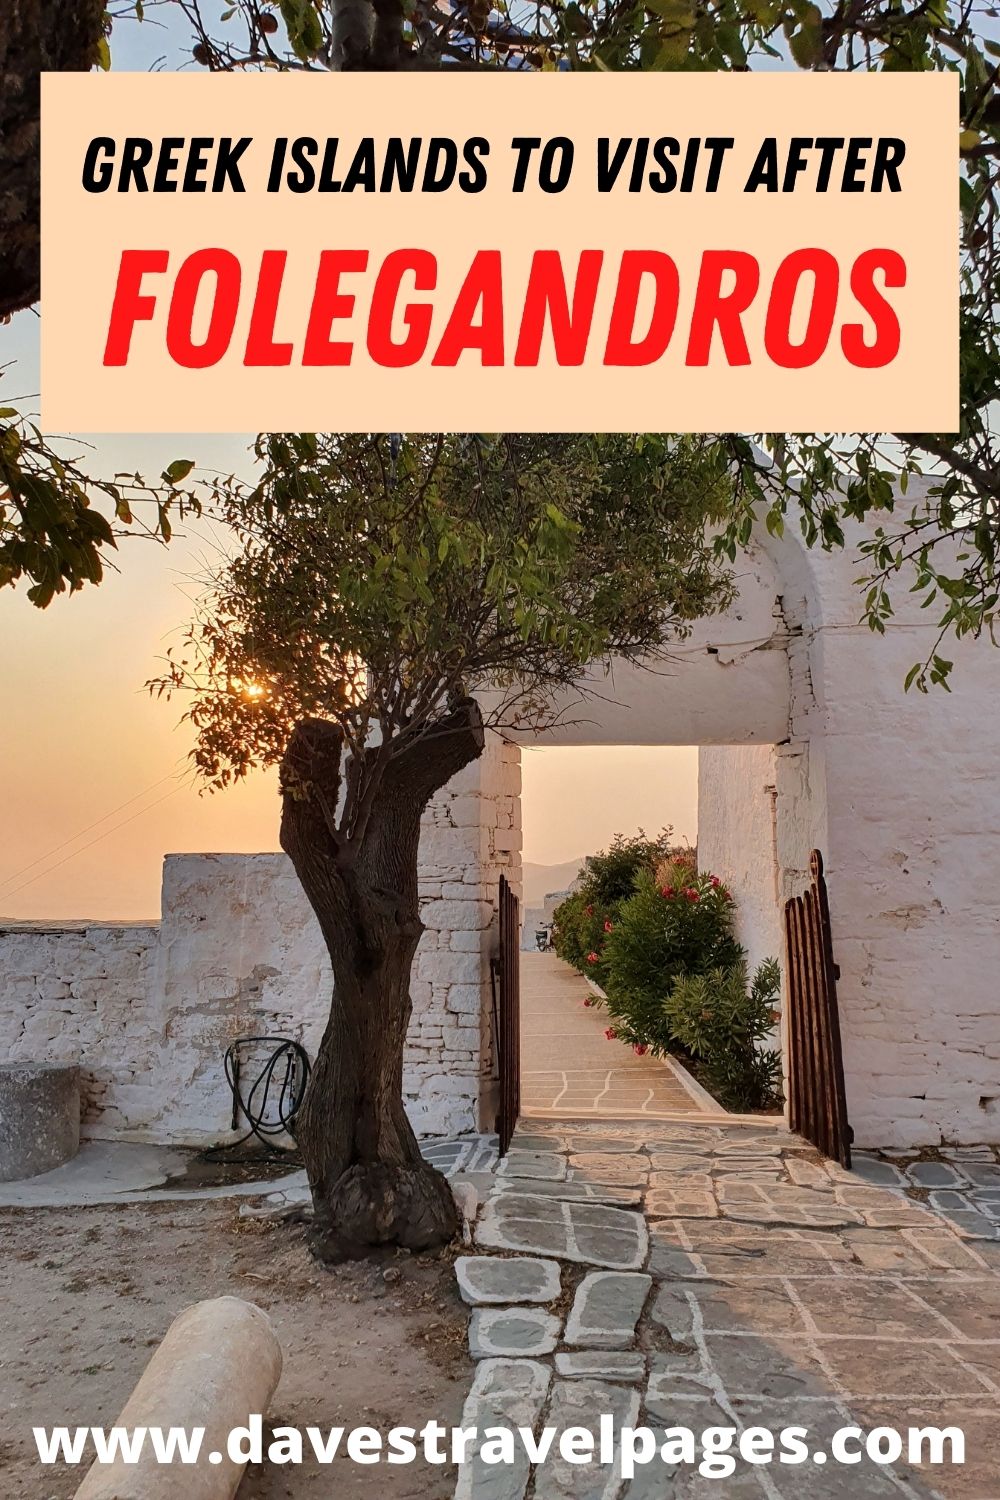 Which Greek islands to visit after Folegandros?